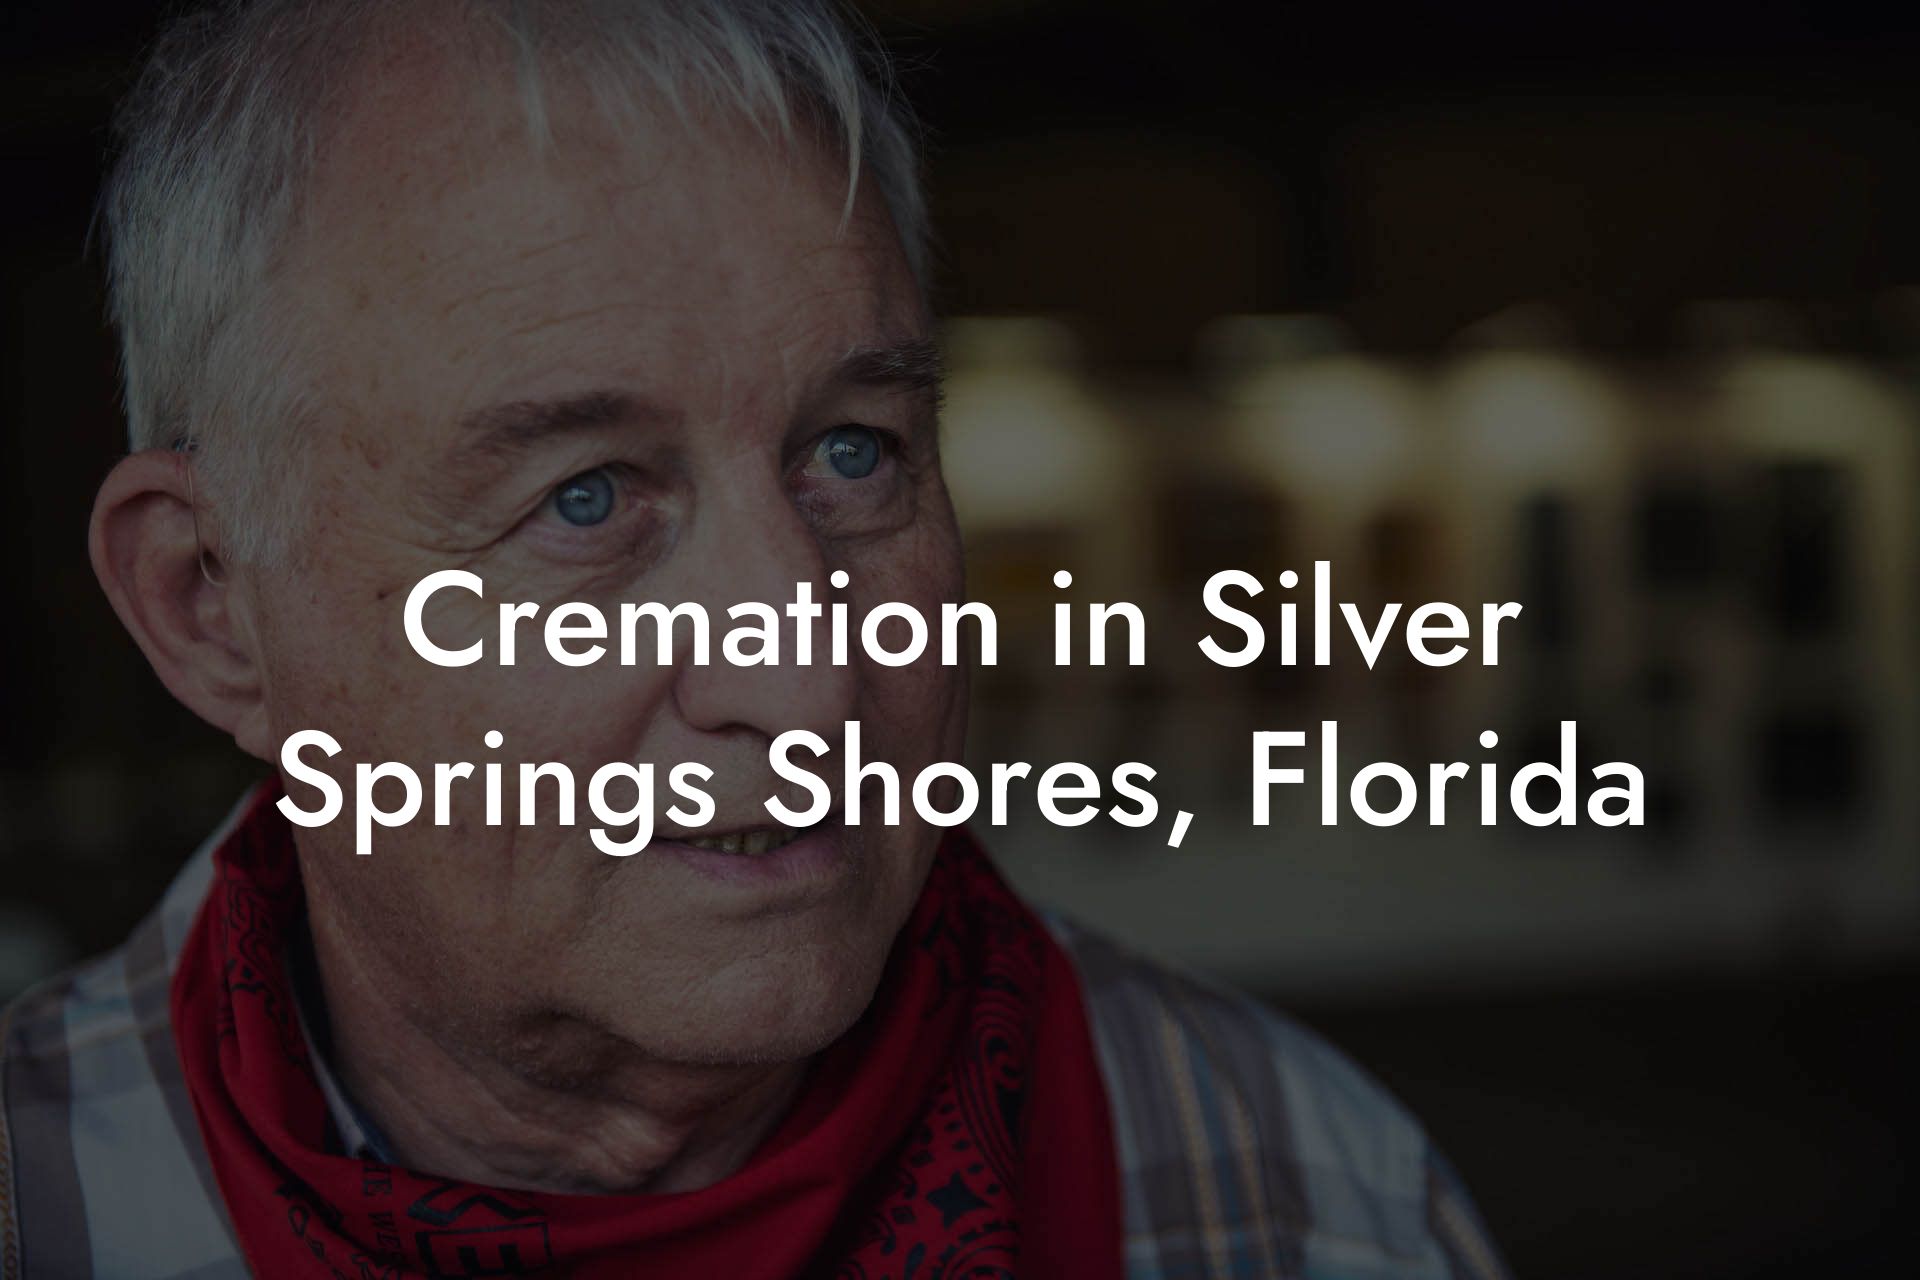 Cremation in Silver Springs Shores, Florida